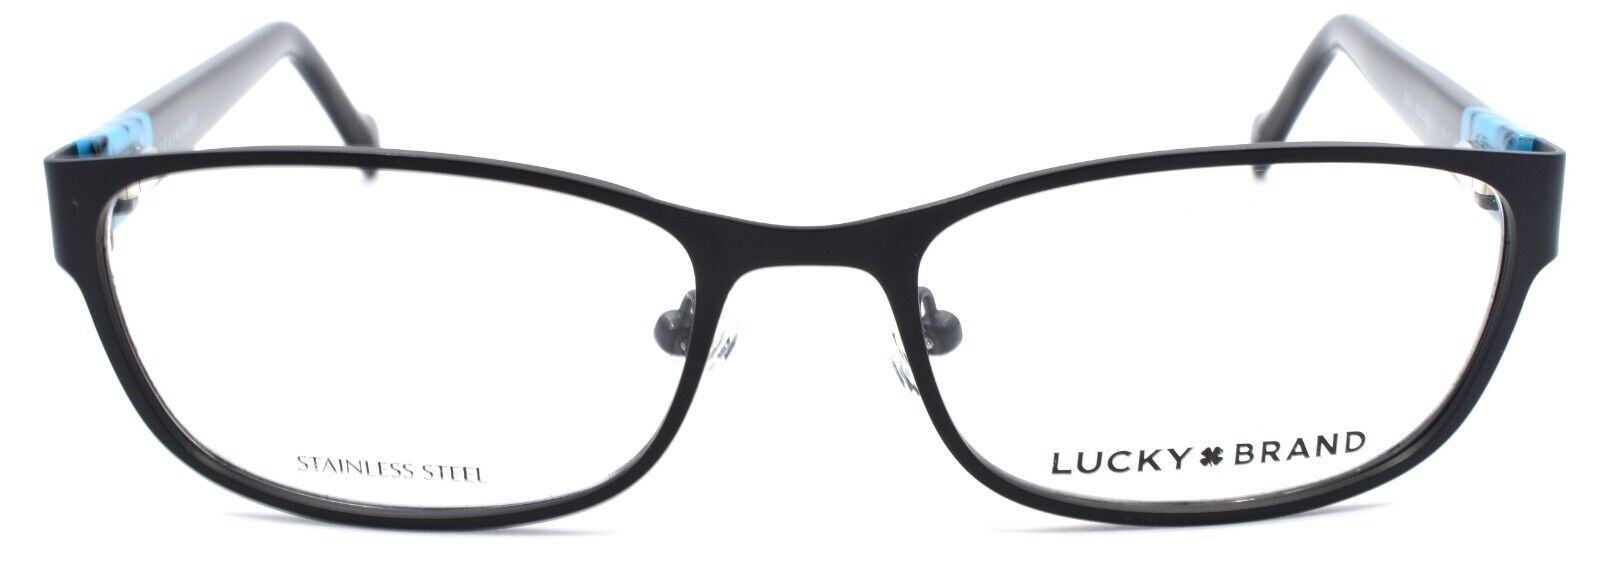 2-LUCKY BRAND D121 Women's Eyeglasses Frames 51-17-140 Black / Blue-751286341980-IKSpecs